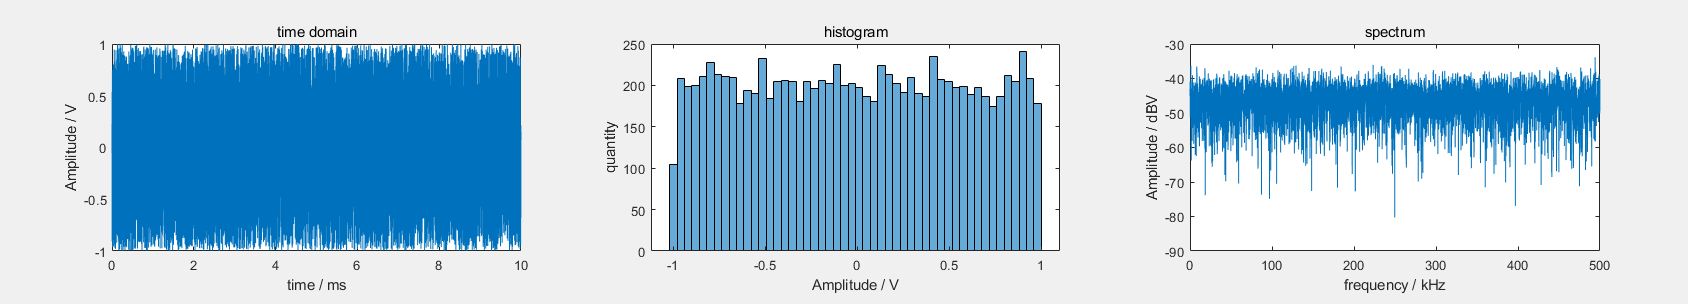 Uniformly distributed random noise Matlab Simulation